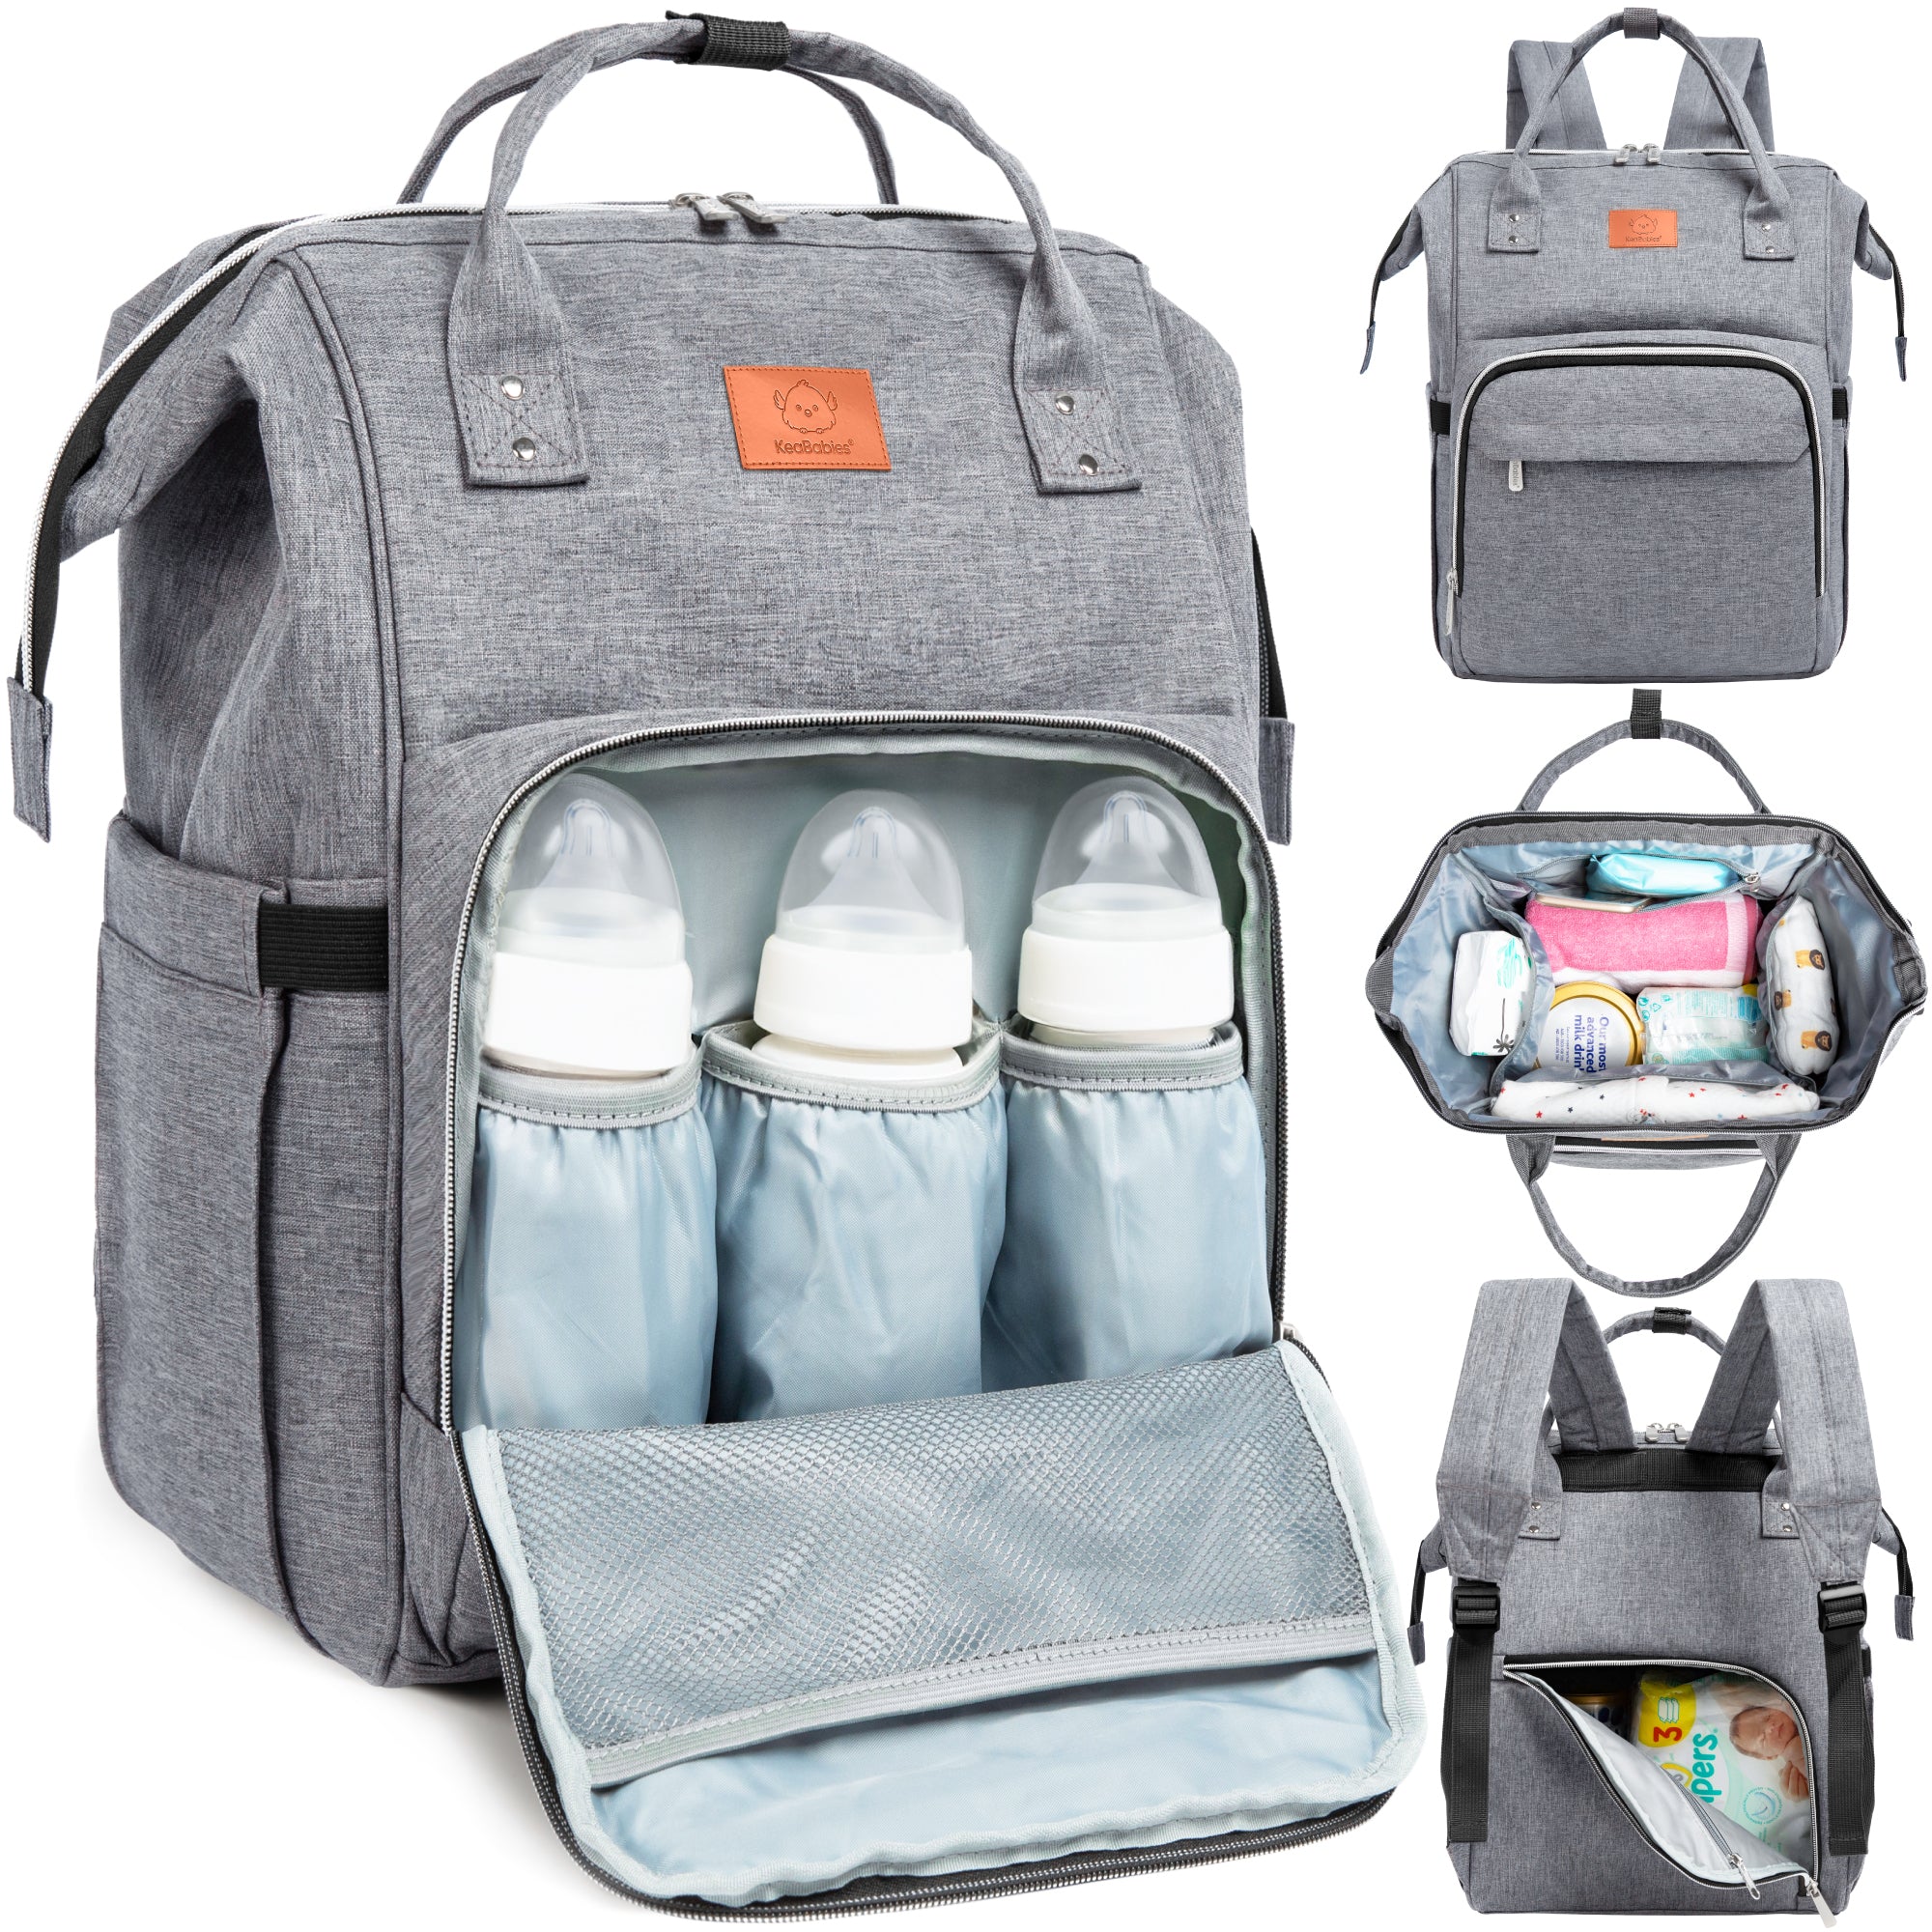 KeaBabies Original Diaper Bag Backpack, Large Waterproof Travel Baby Bags with Changing Pad - image 1 of 10